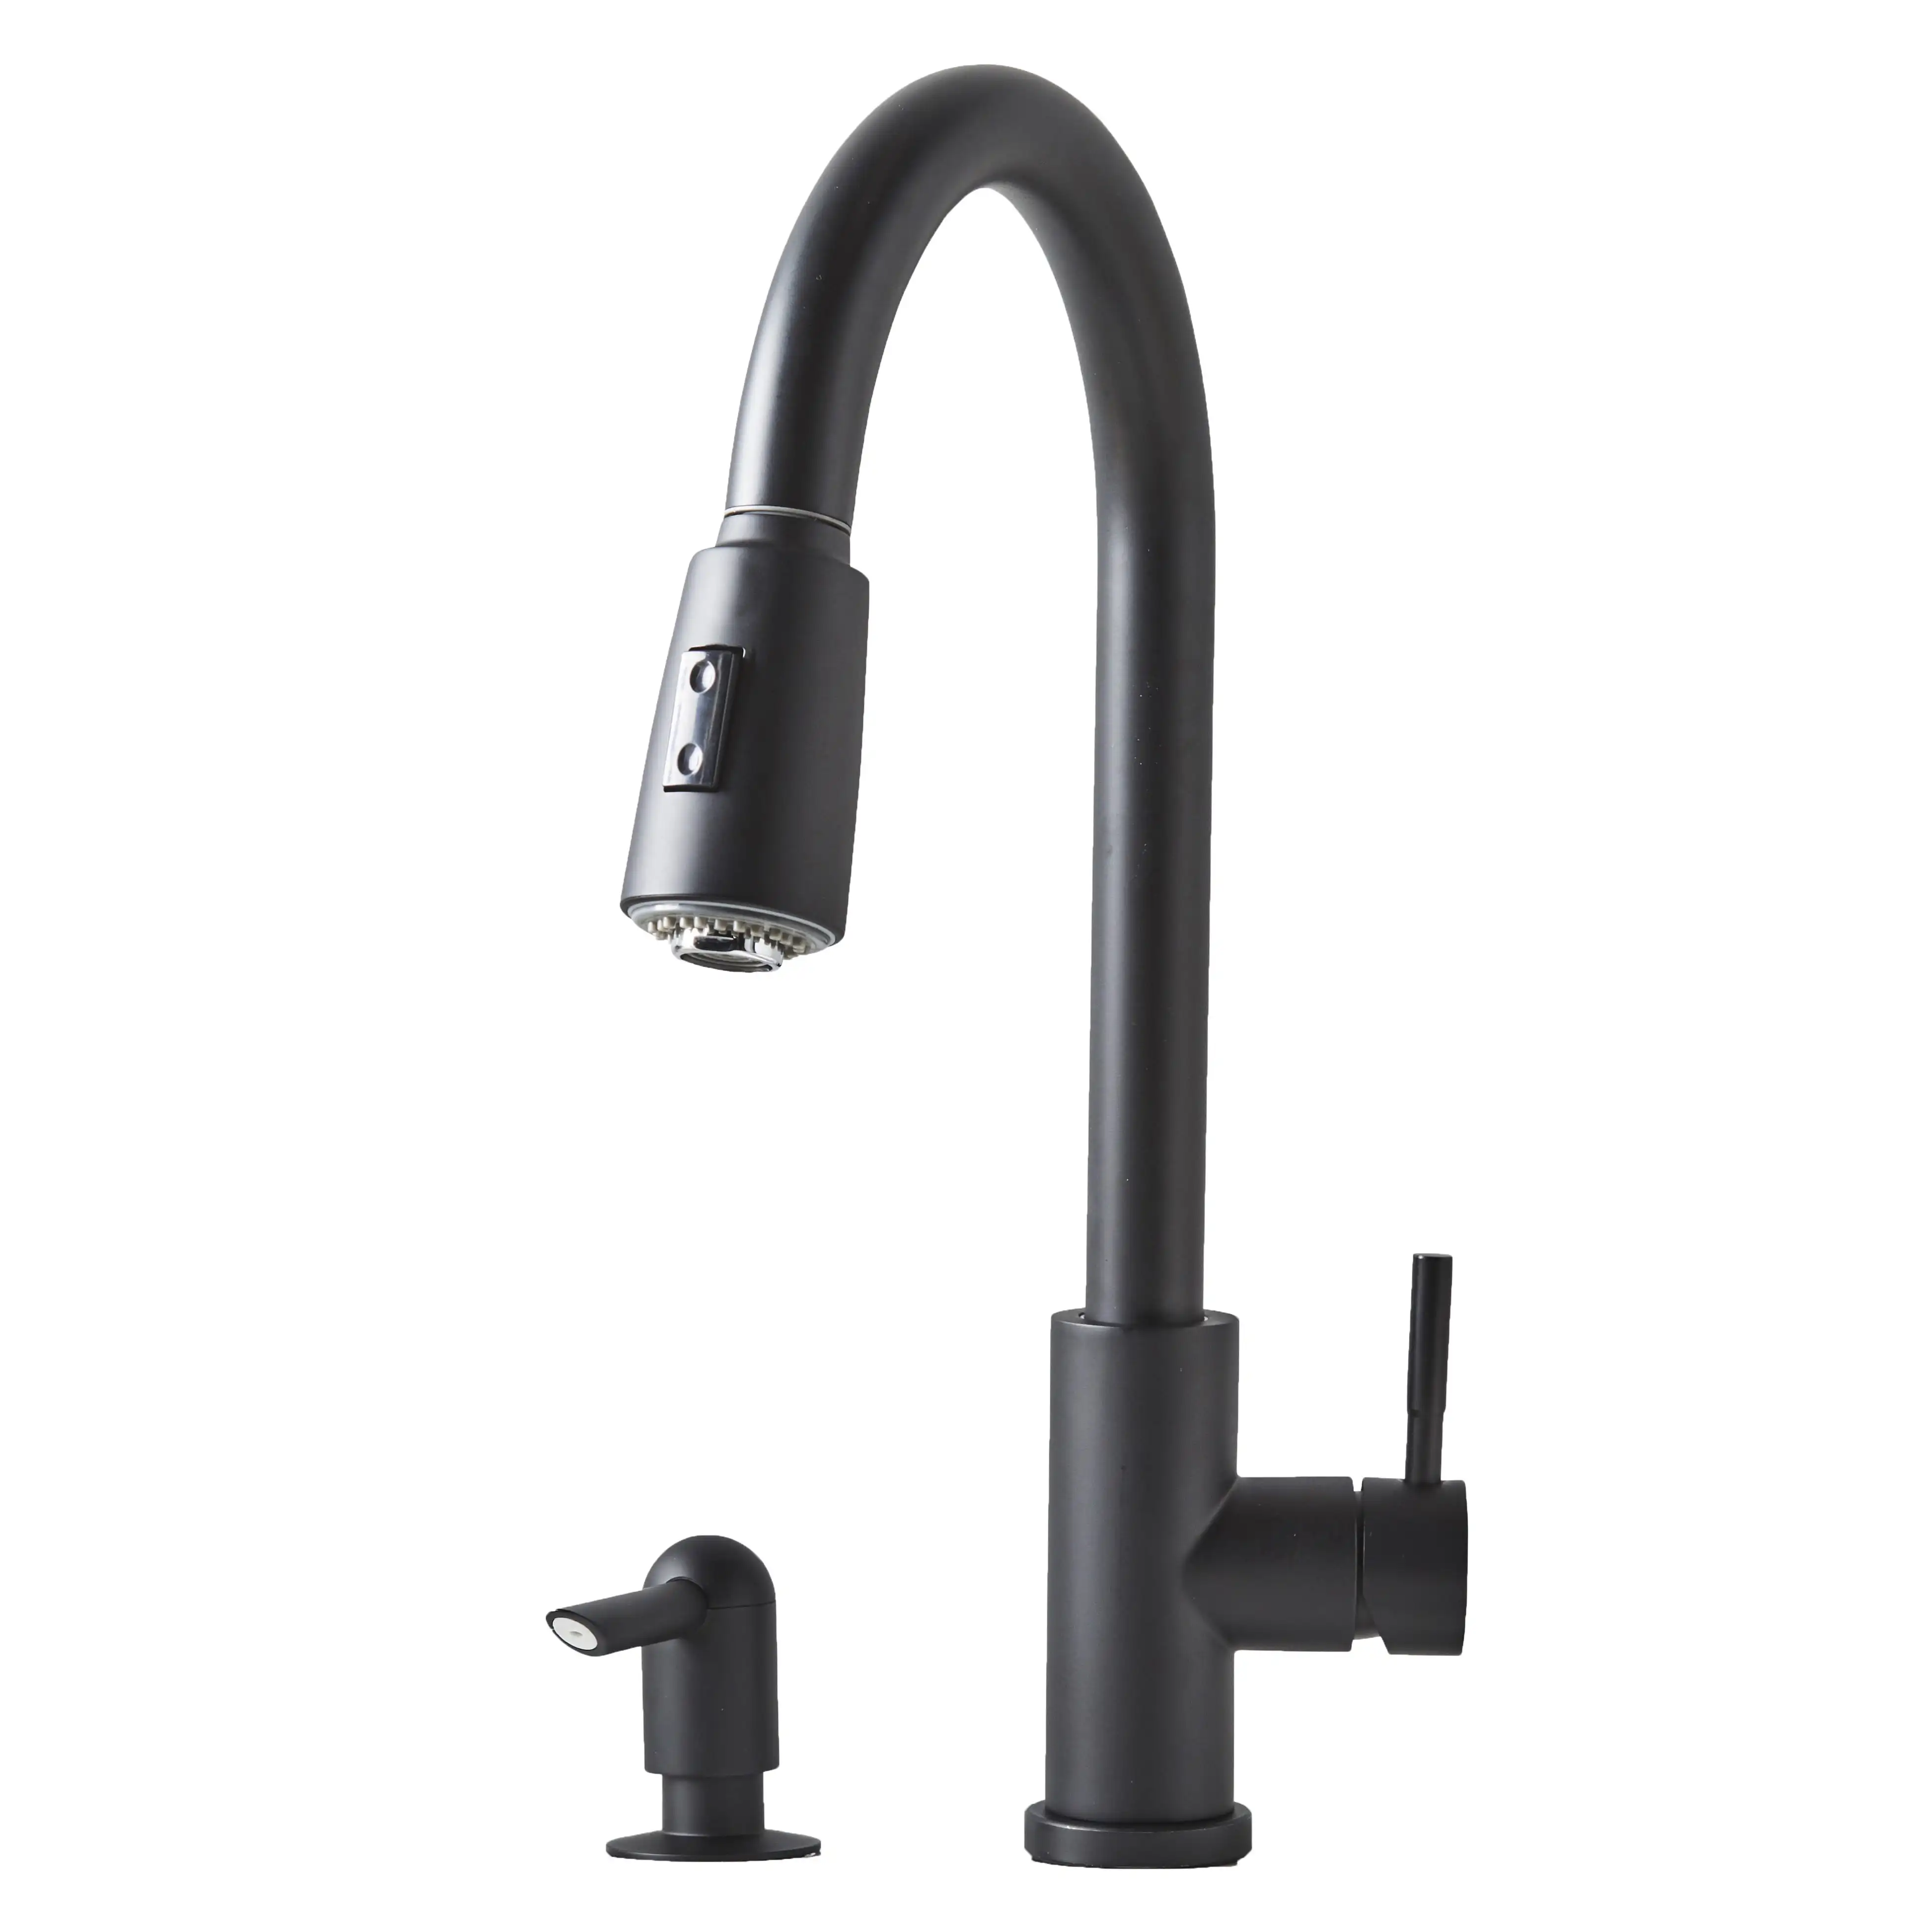 

Better Homes & Gardens Elmont Pull Down Kitchen Sink Faucet with Soap Dispenser, Matte Blackmodern kitchen faucet